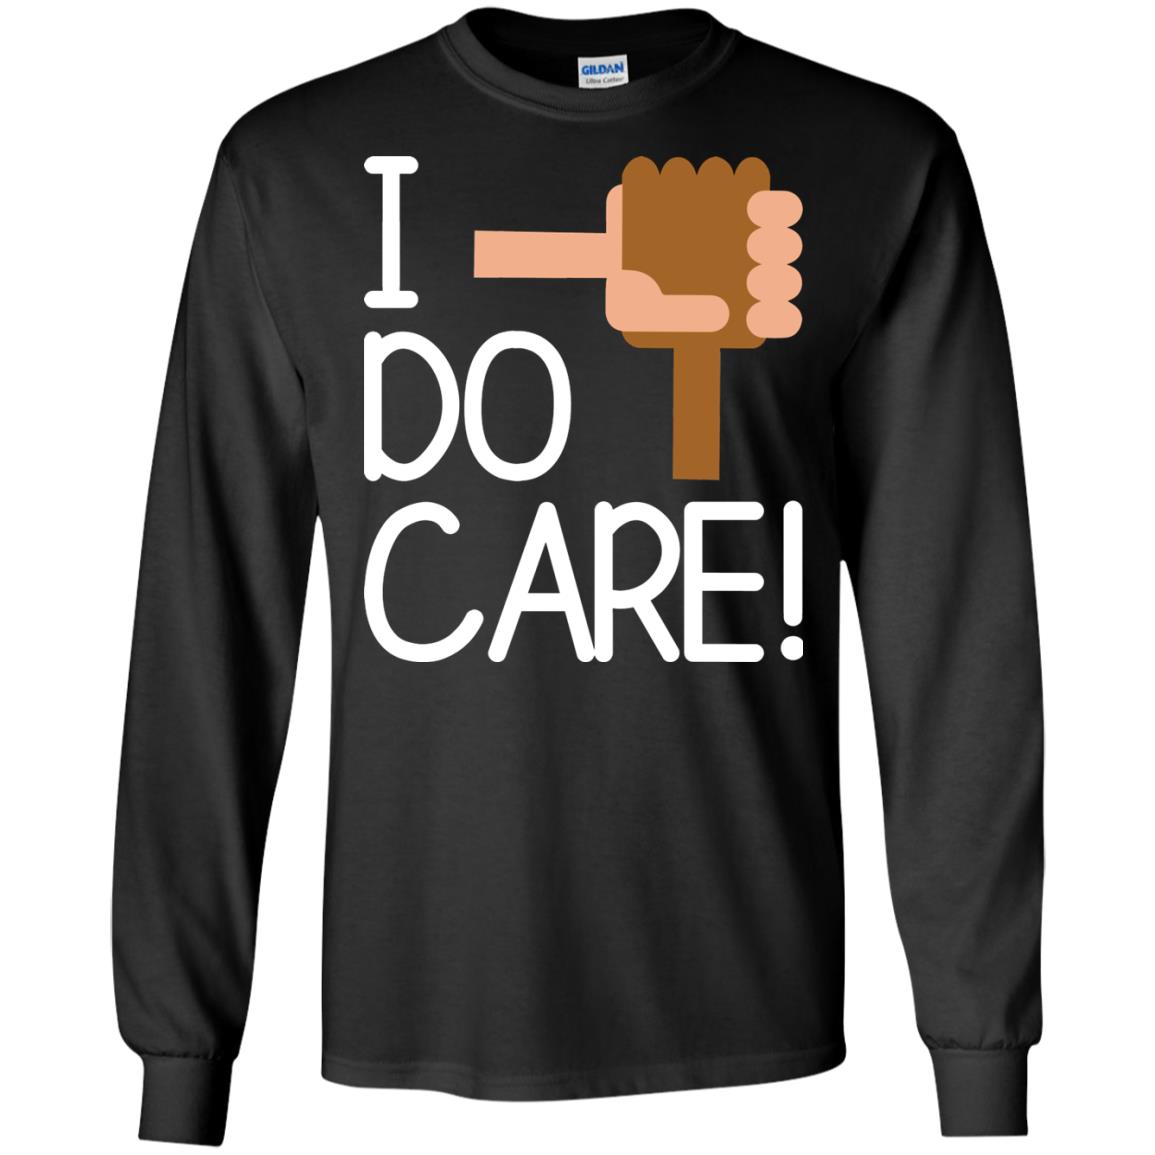 I Do Care Hot Saying 2018 ShirtG240 Gildan LS Ultra Cotton T-Shirt